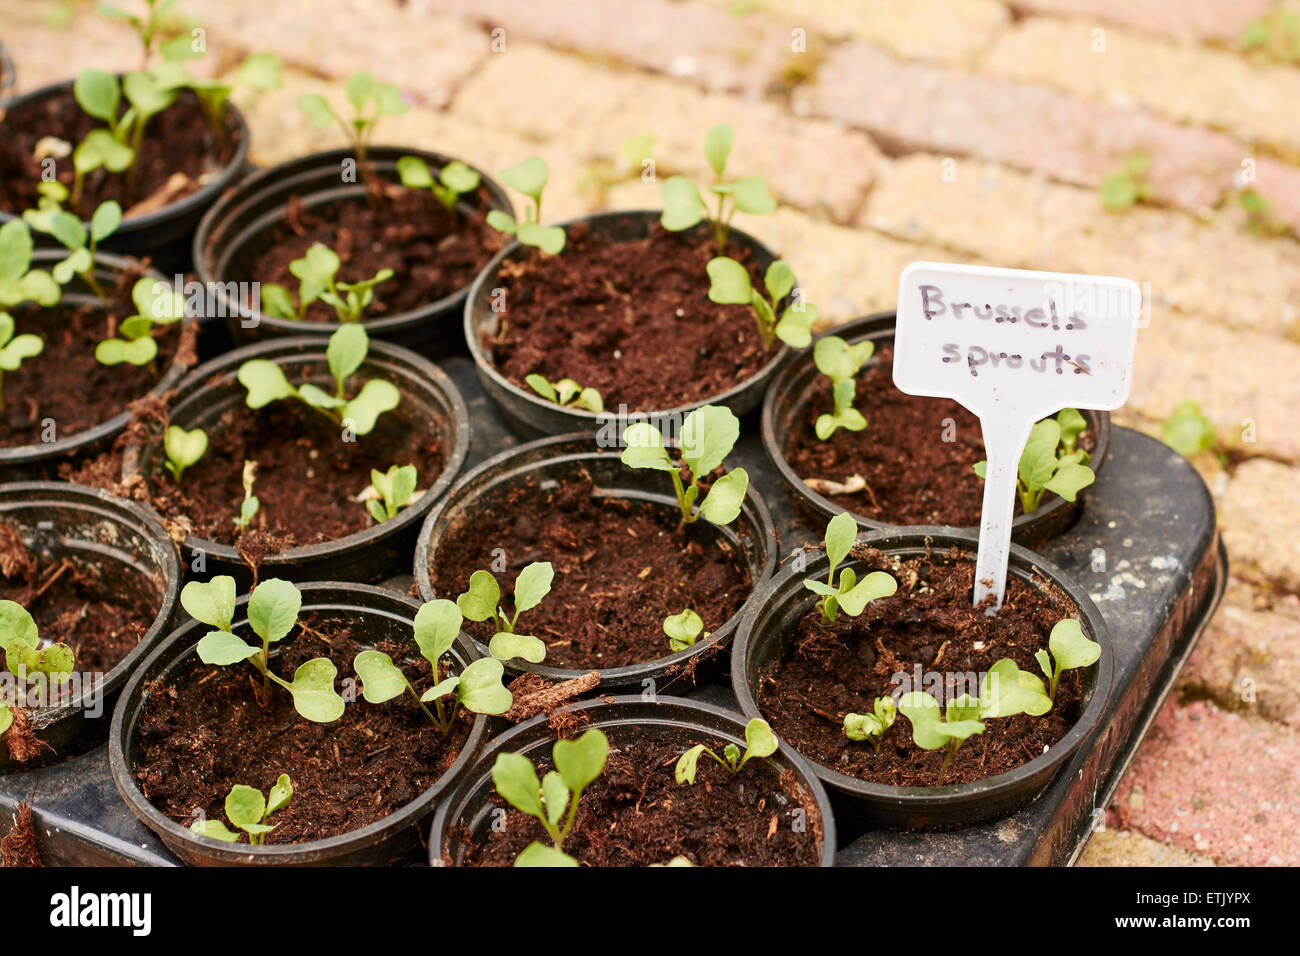 Les semis de choux de Bruxelles dans de petits pots. Banque D'Images